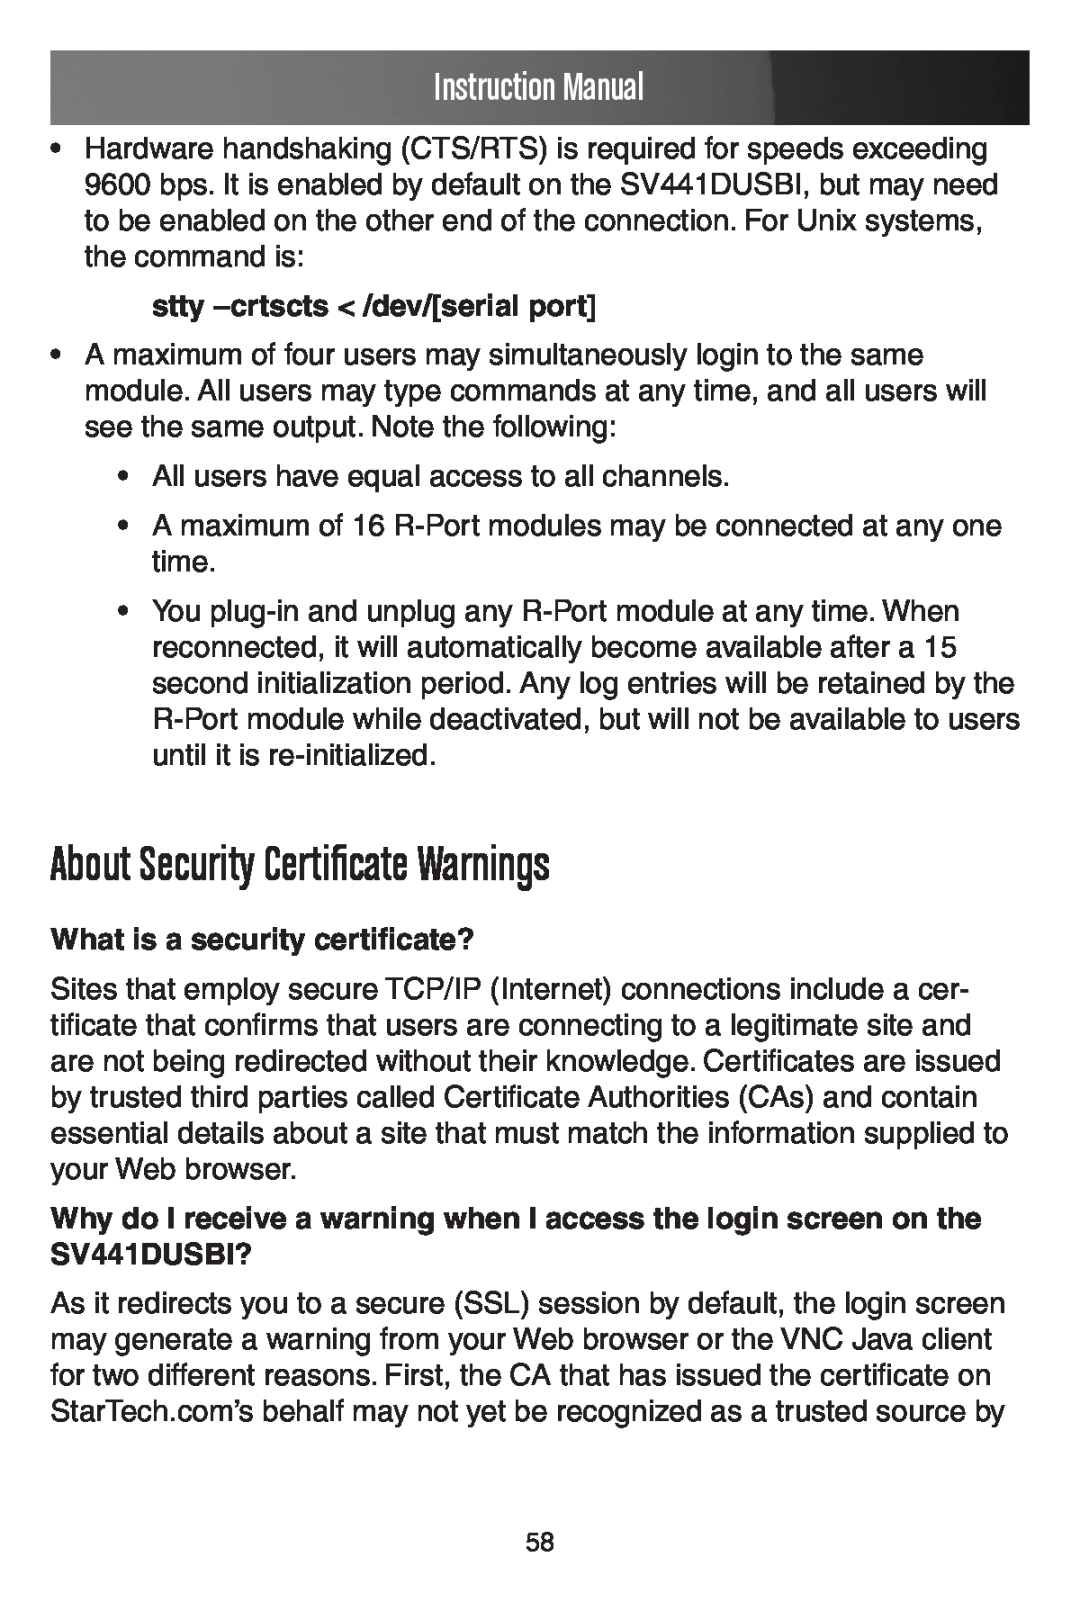 StarTech.com SV441DUSBI About Security Certificate Warnings, stty -crtscts /dev/serial port, Instruction Manual 